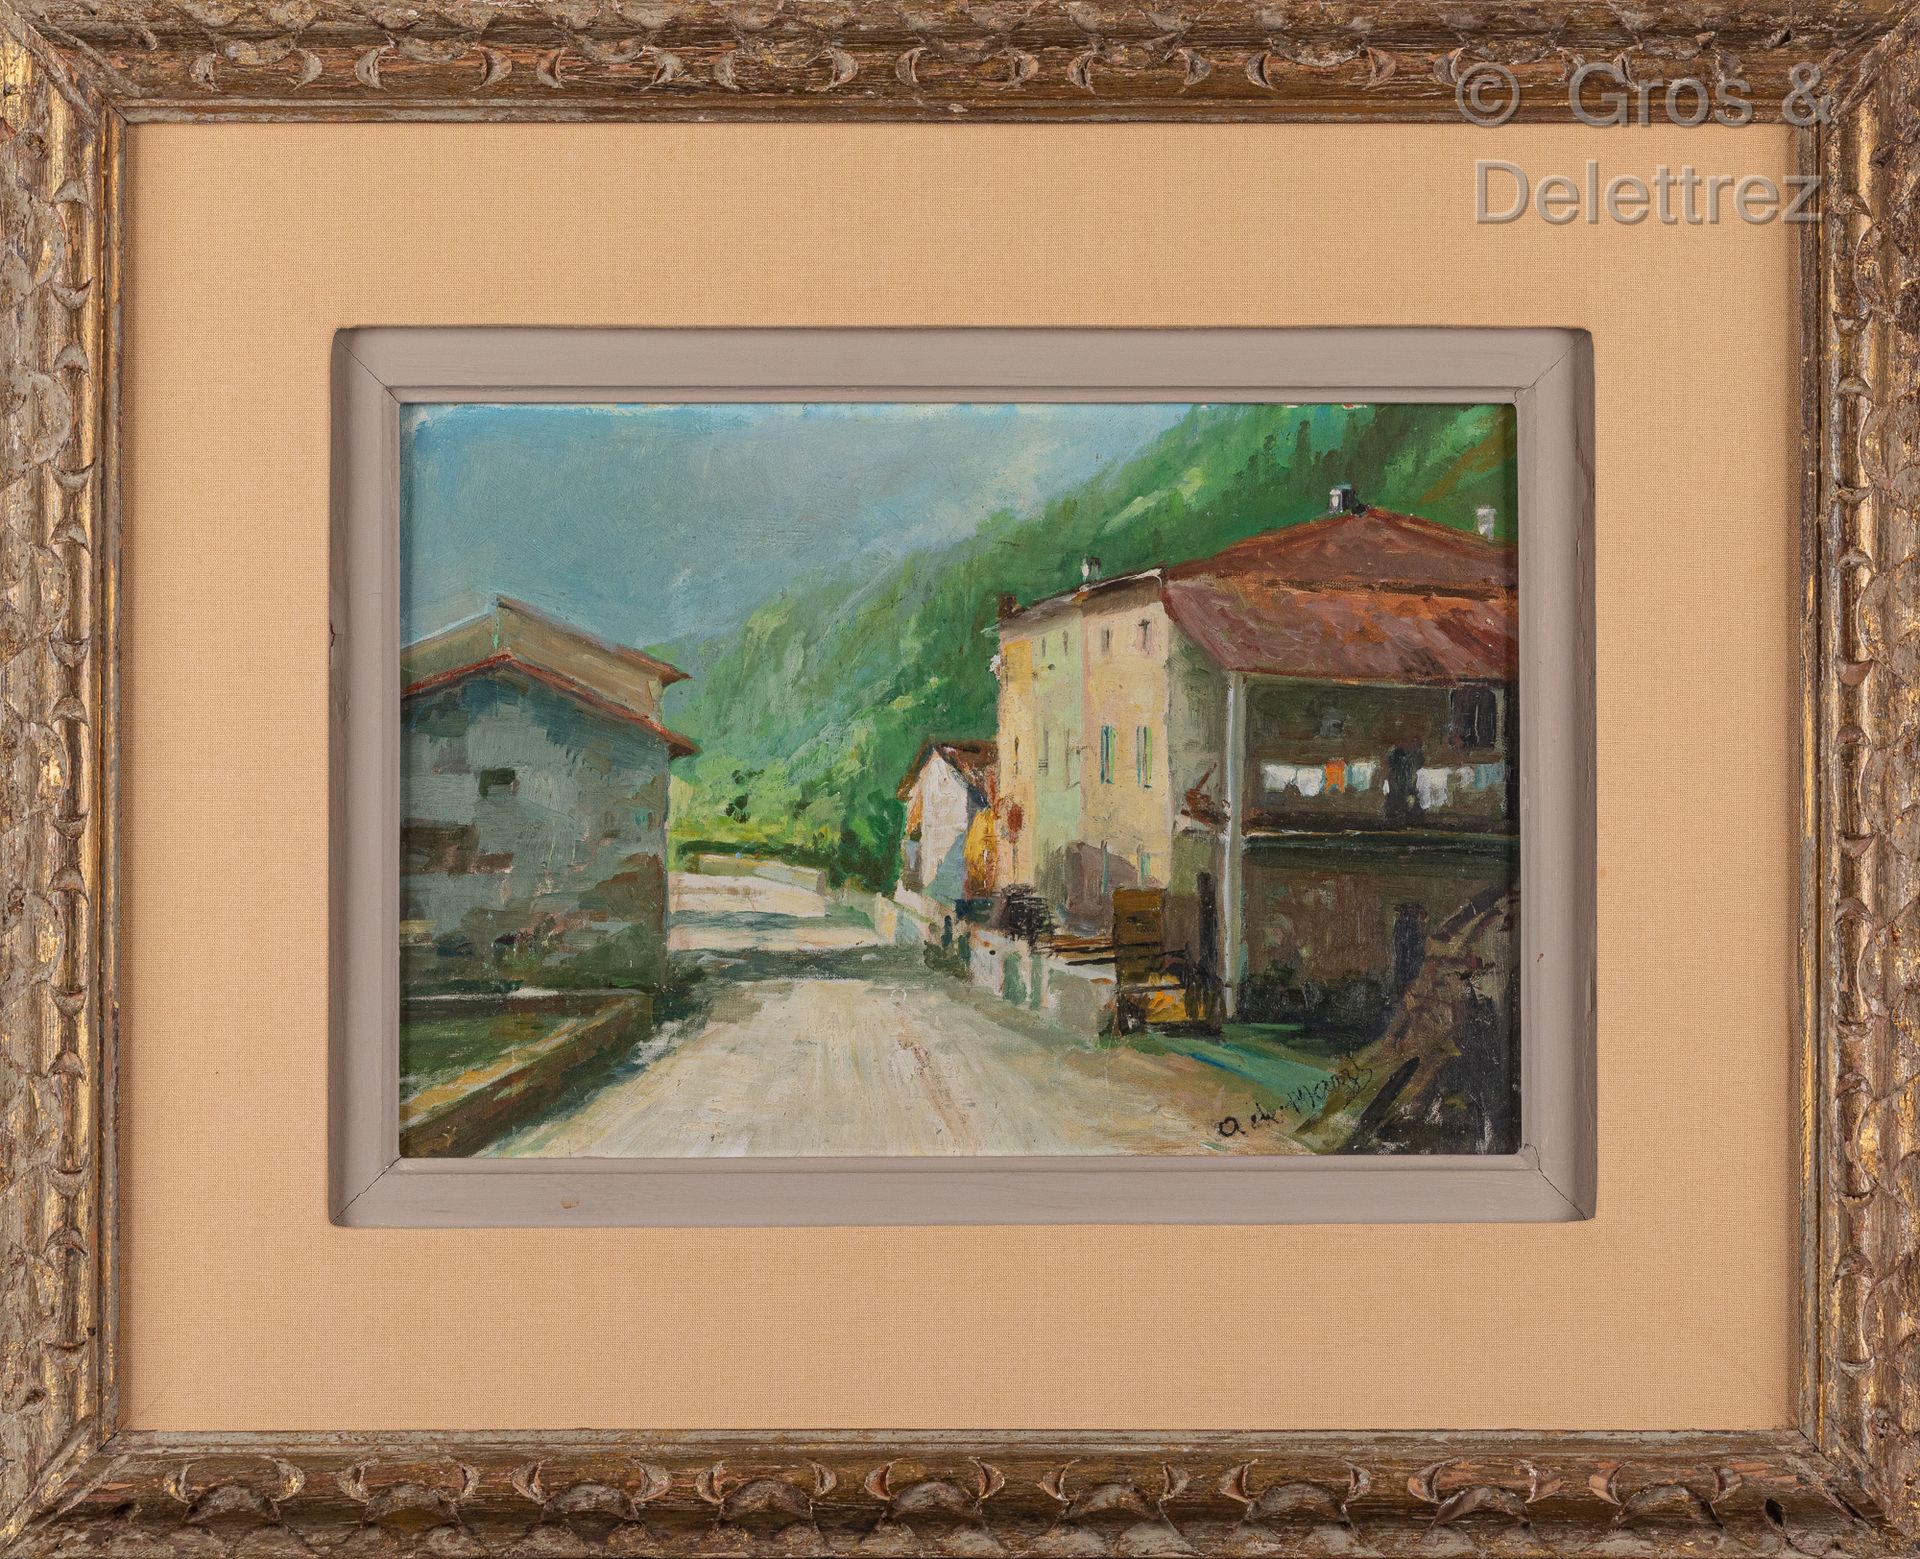 Null Aldo MARZI (1911-1984)

Village street 

Oil on isorel signed lower right

&hellip;